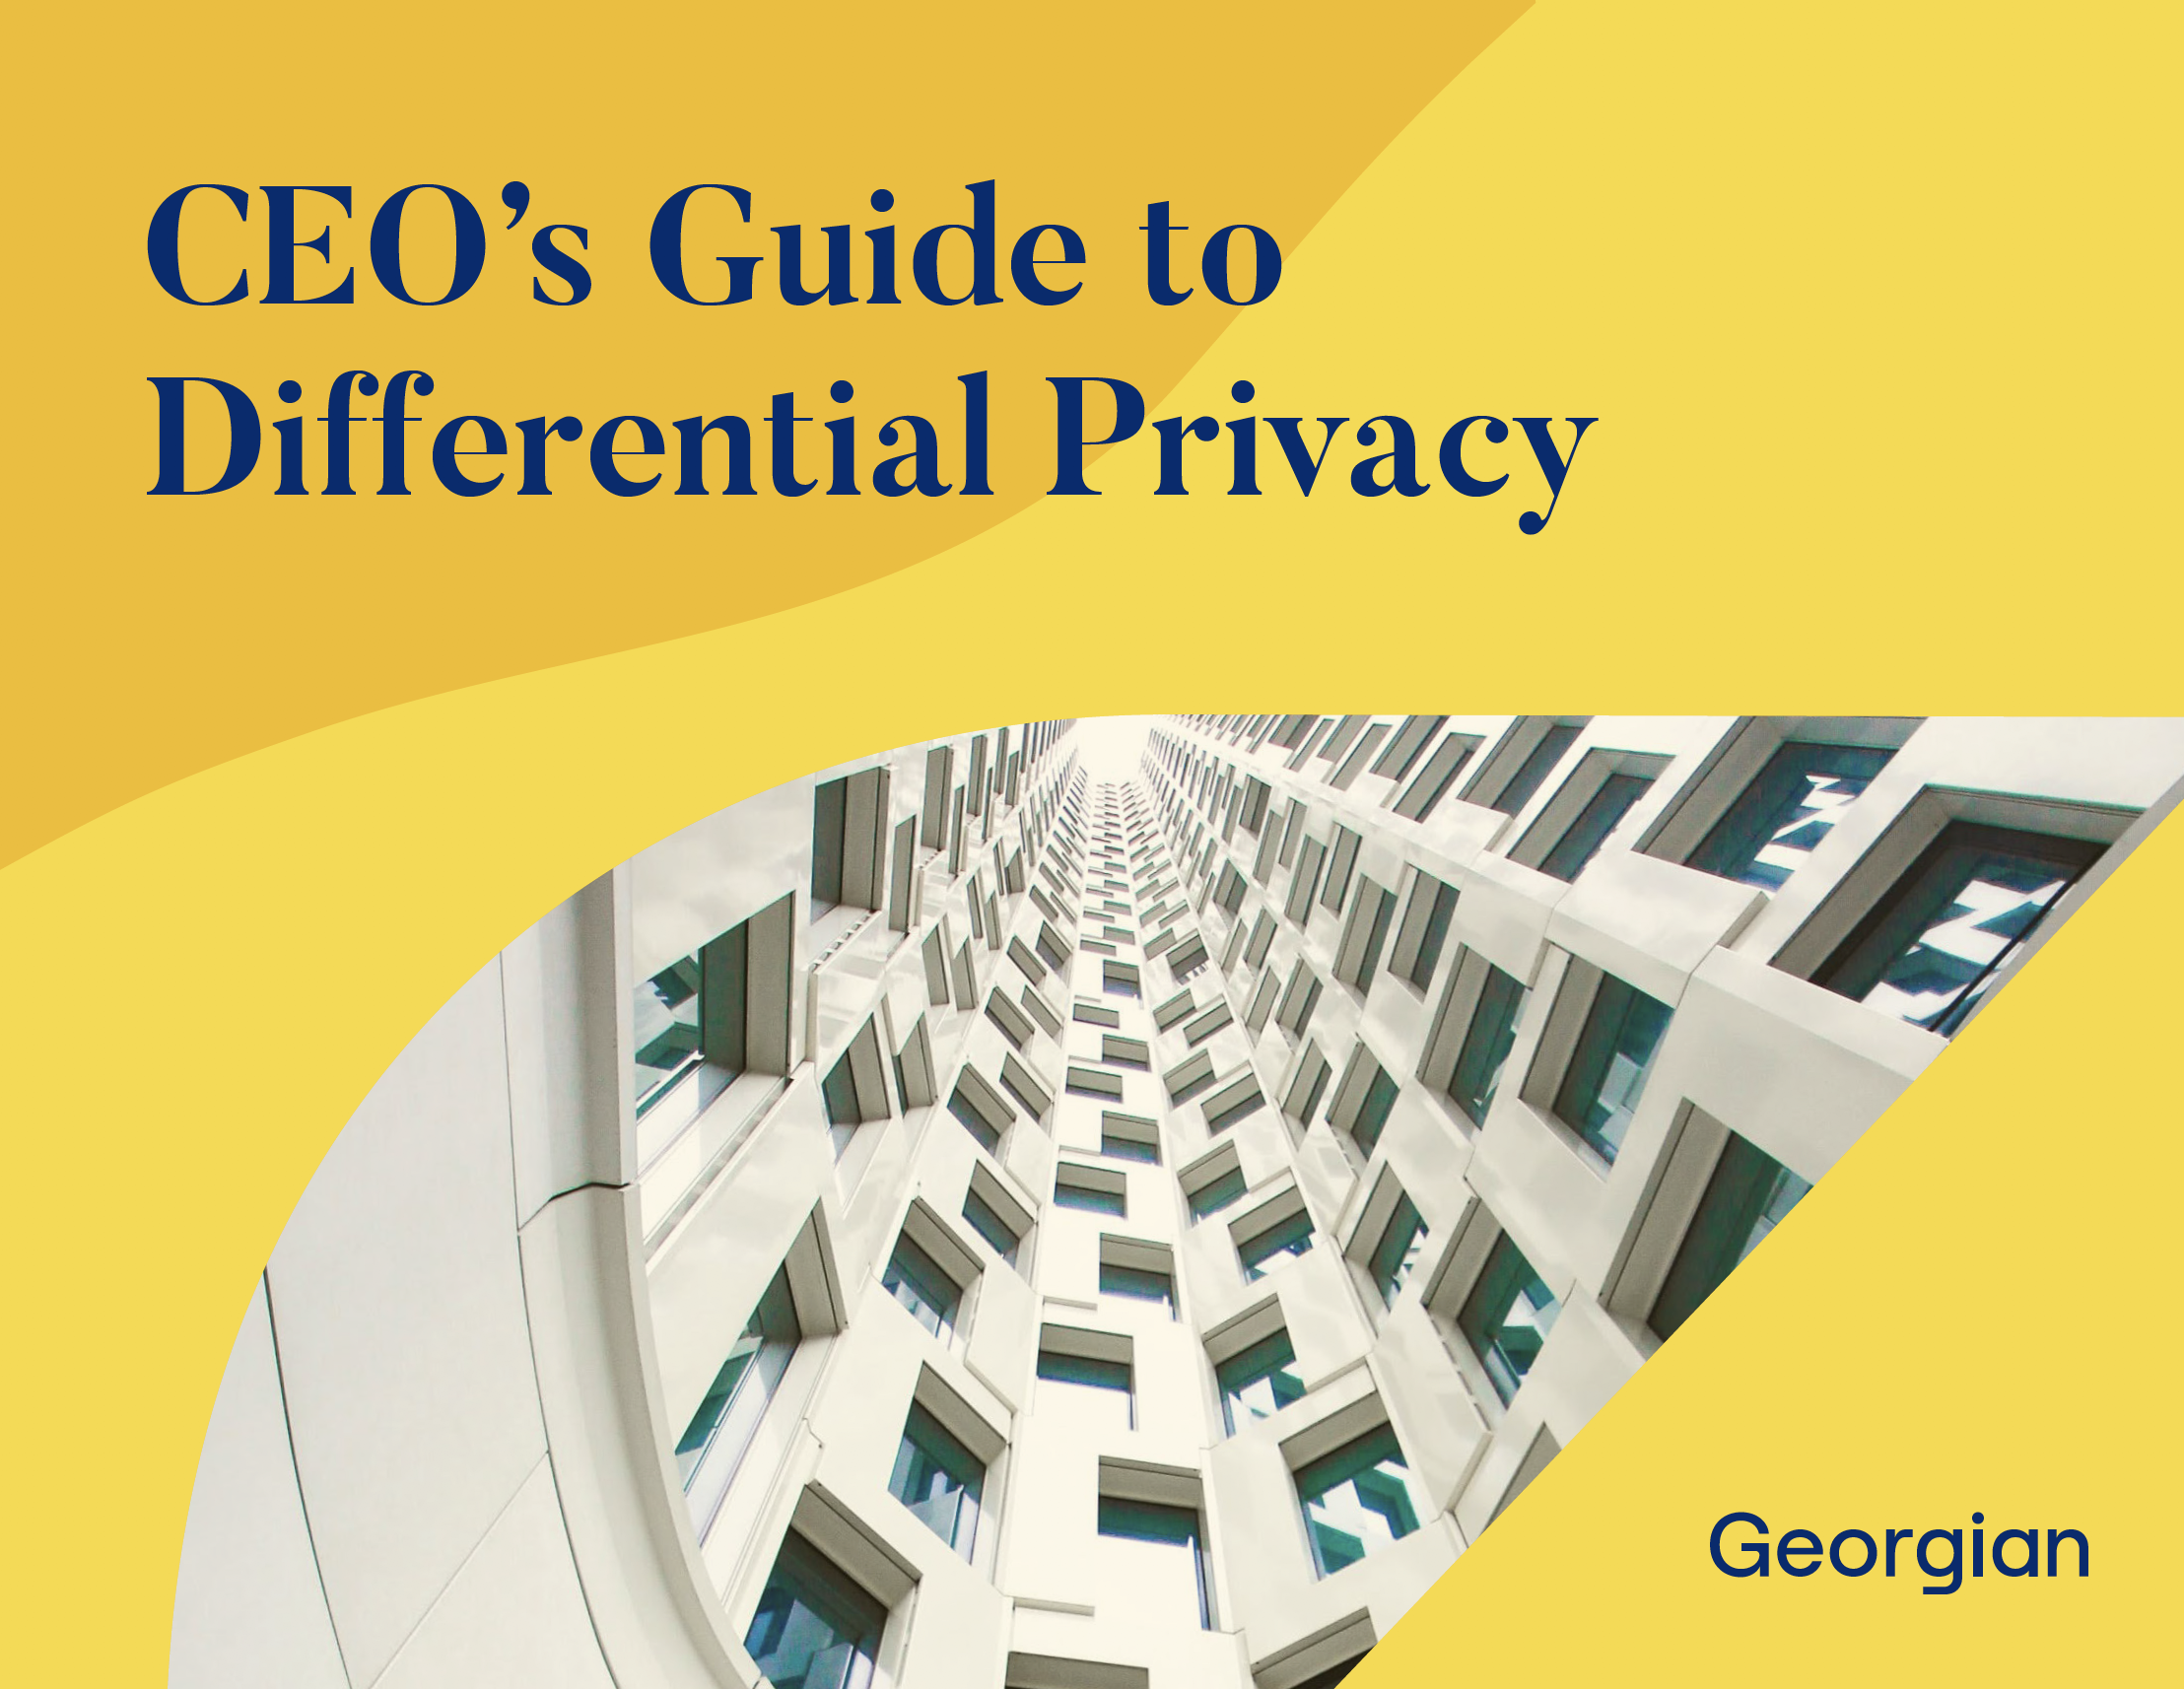 C E O's Guide to Differential Privacy. Georgian.